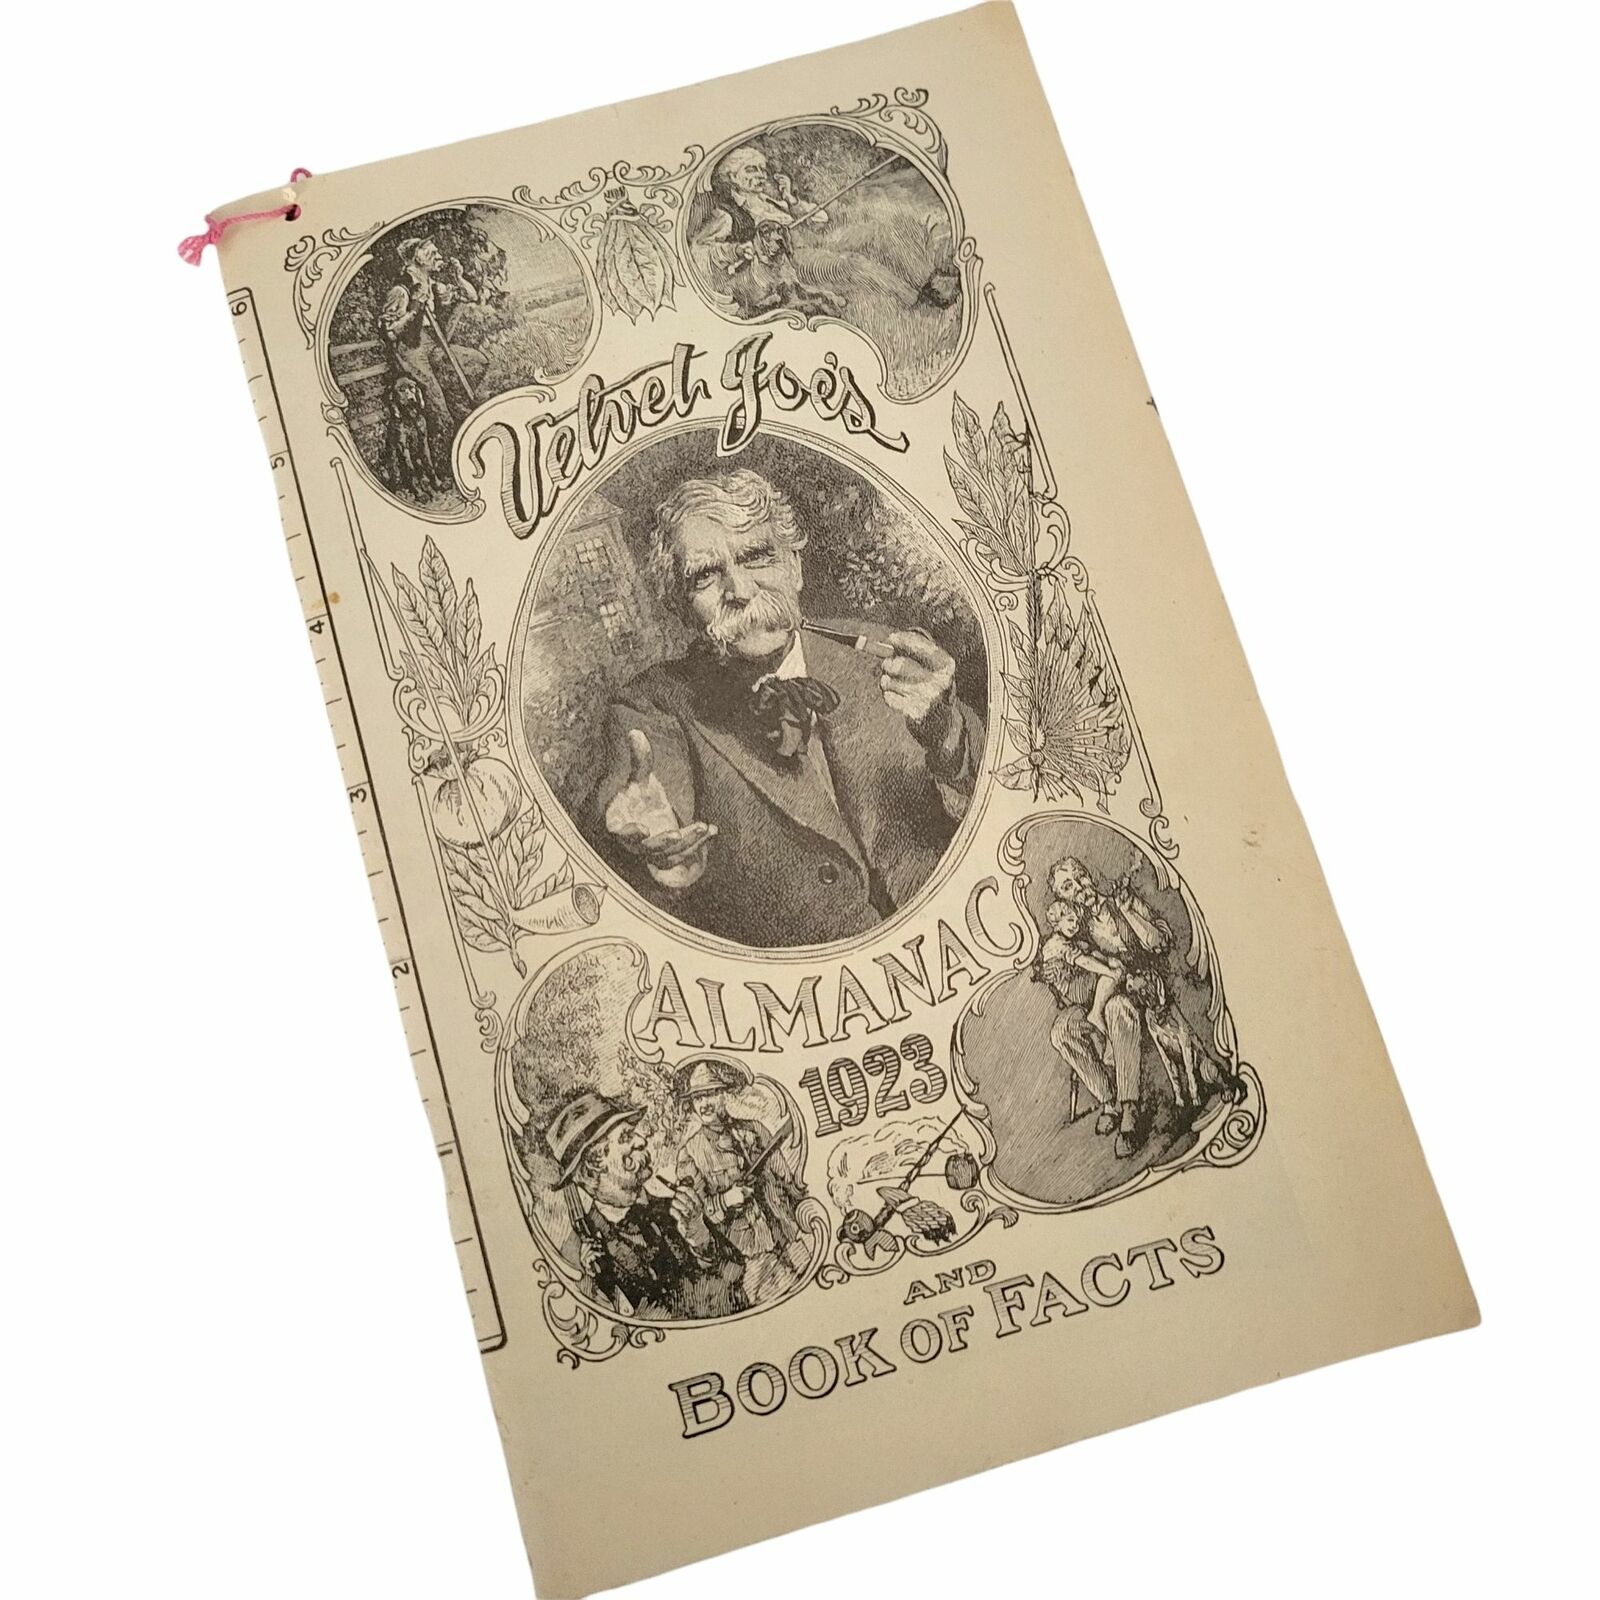 Velvet Joe\'s 1923 Almanac A Book of Facts Liggett & Meyers Tobacco Co Vintage